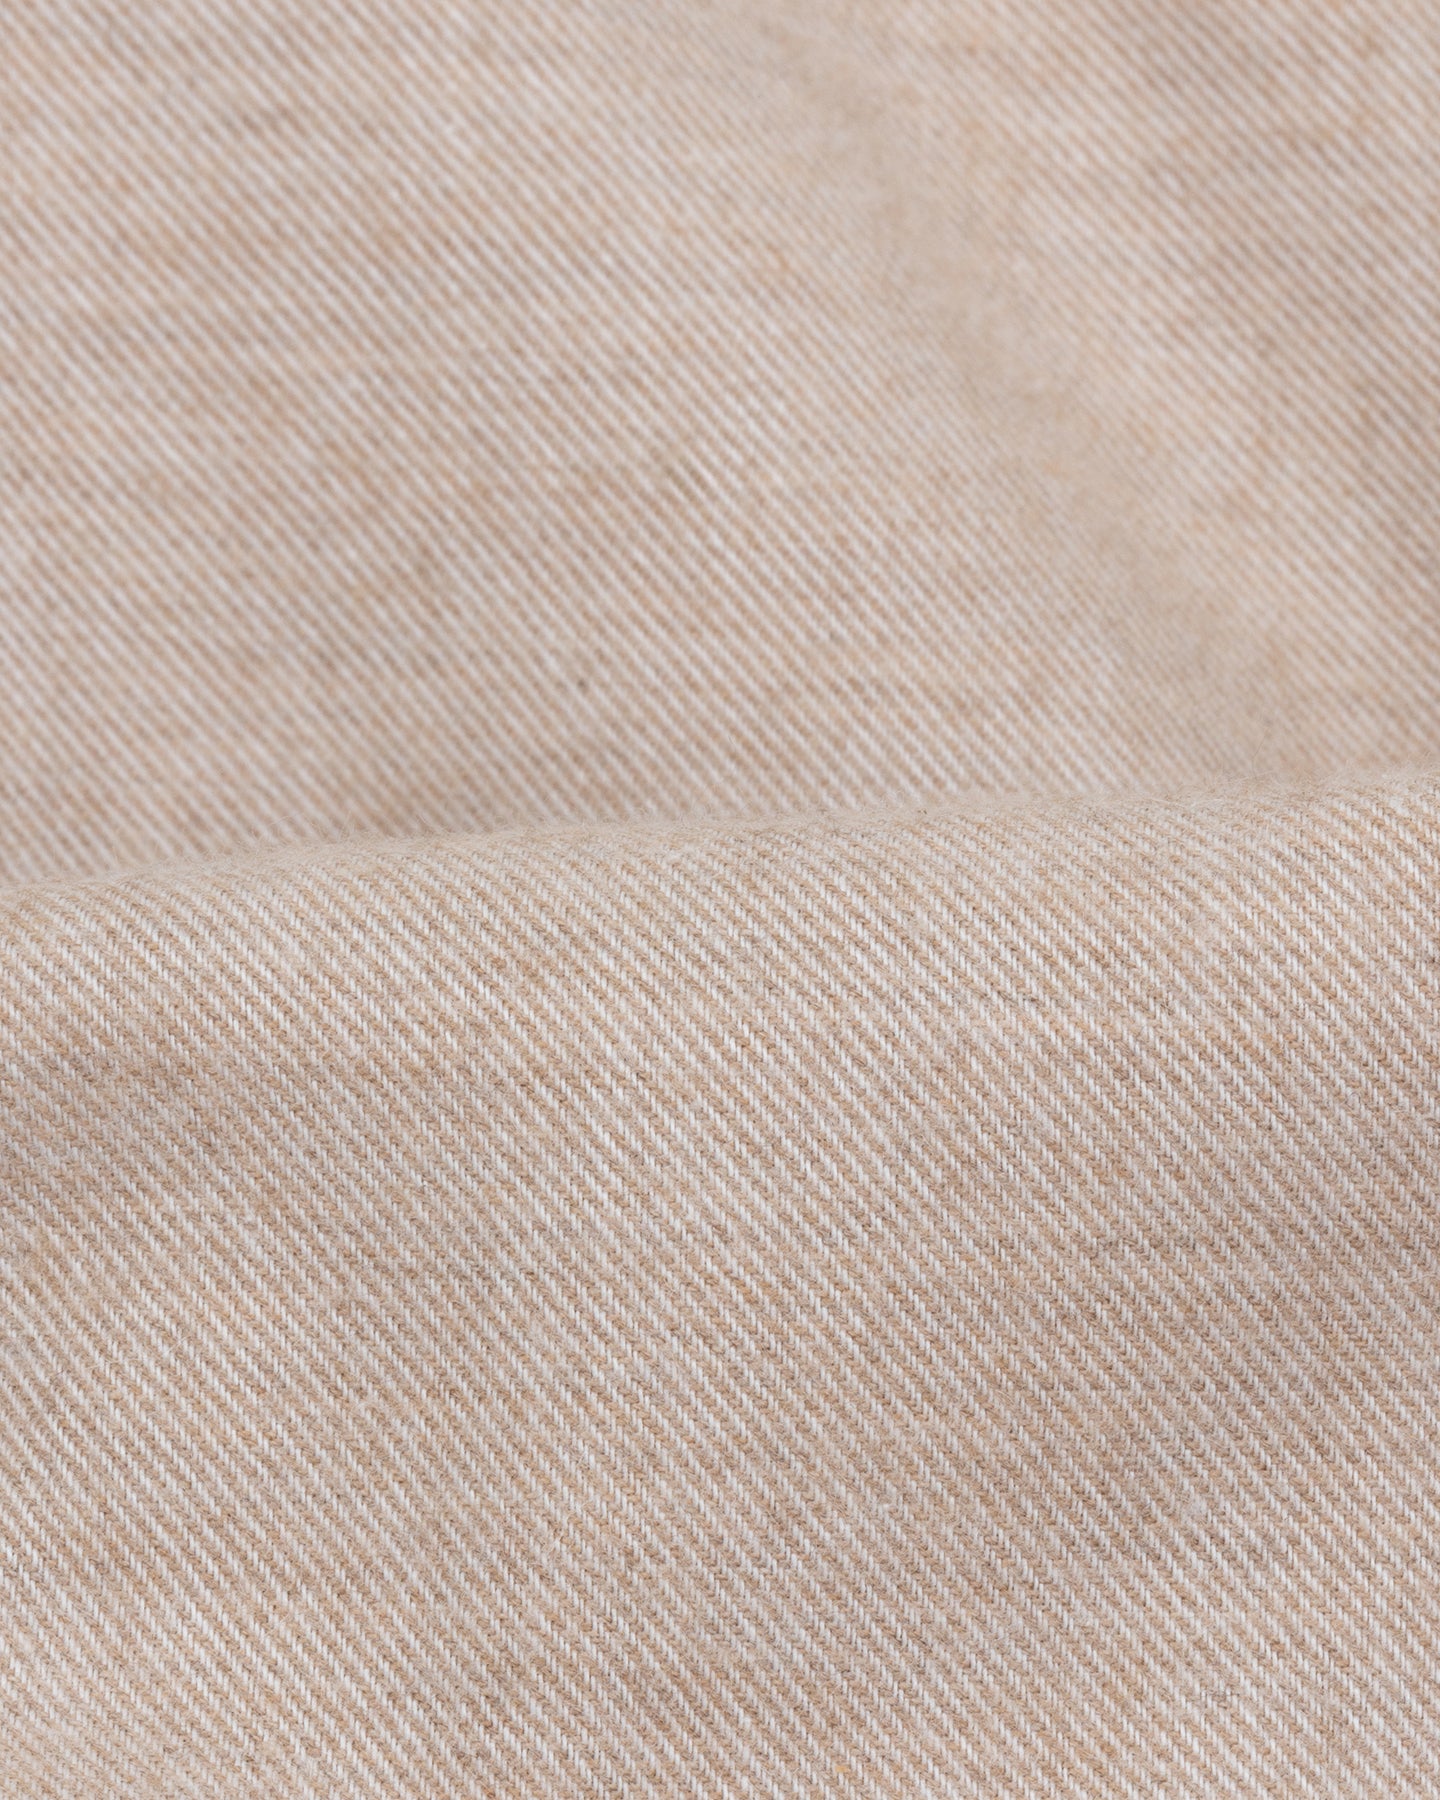 Beige cotton cashmer flannel shirt fabric